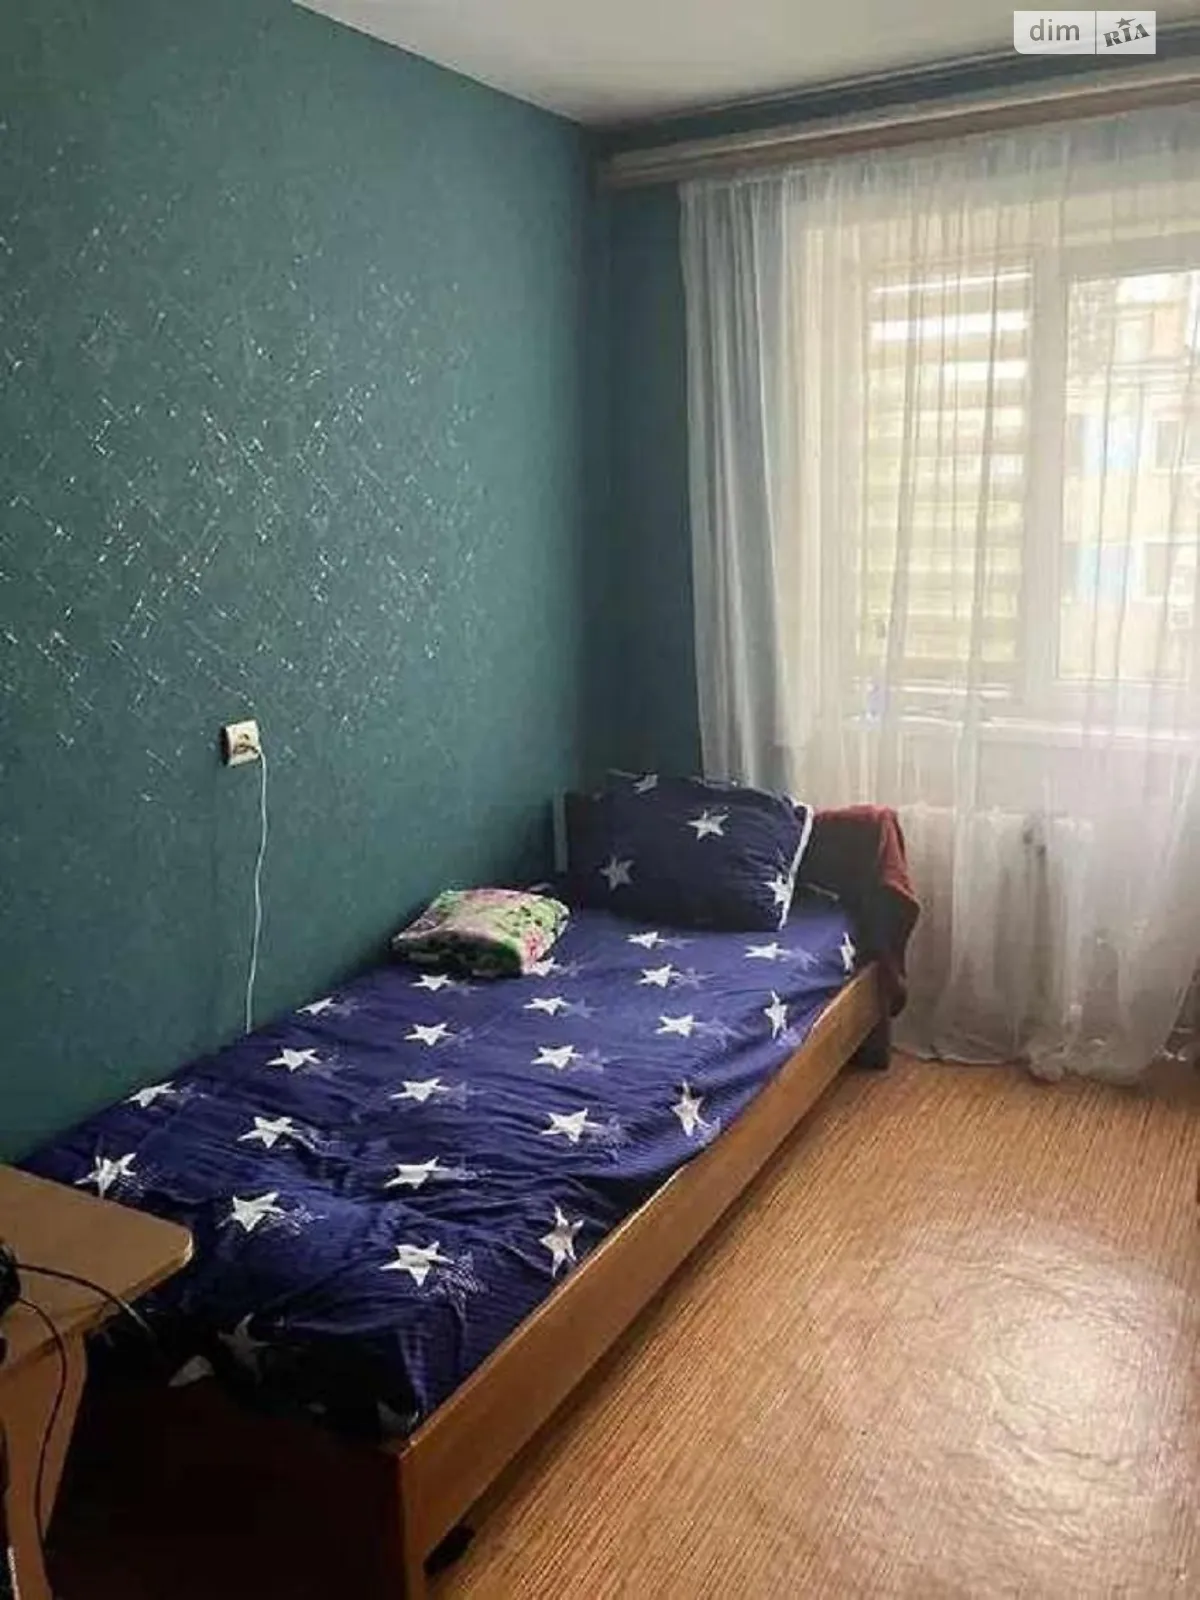 Продается комната 70 кв. м в Одессе, цена: 6900 $ - фото 1